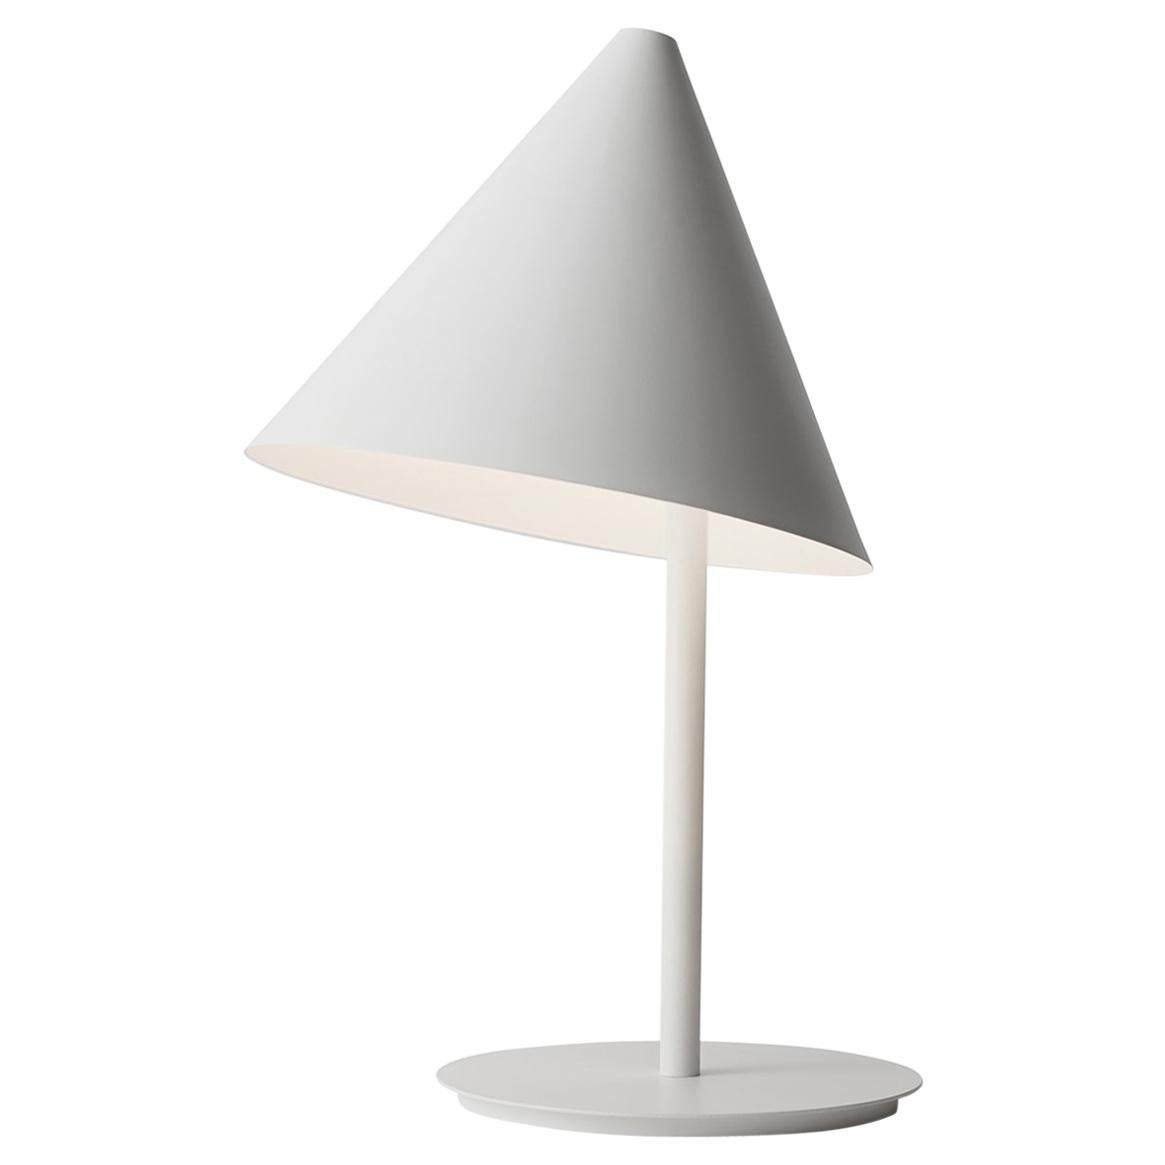 Conic Table Lamp, White Designed by Thomas Bentzen